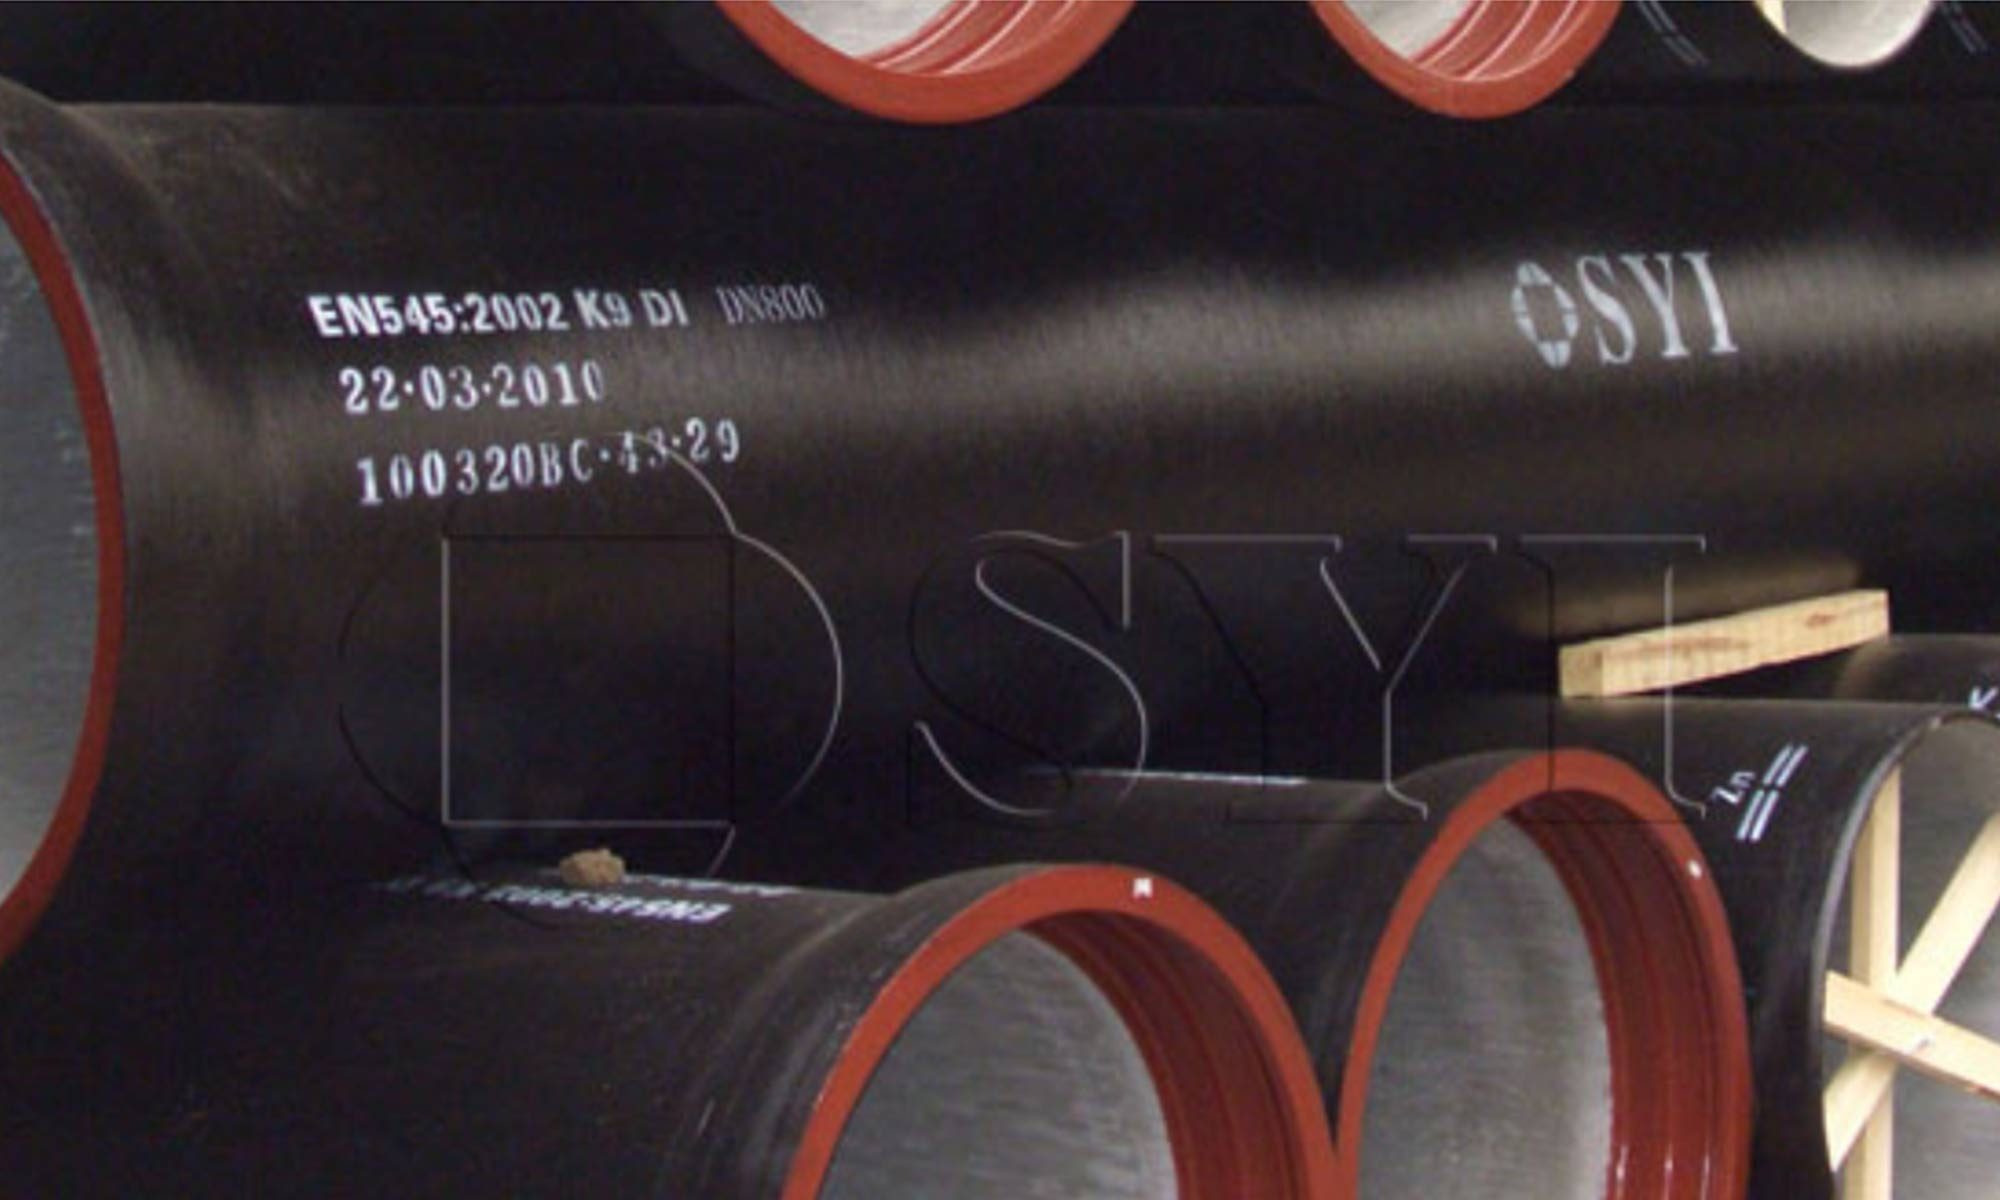 SYI Pipeline Corporation